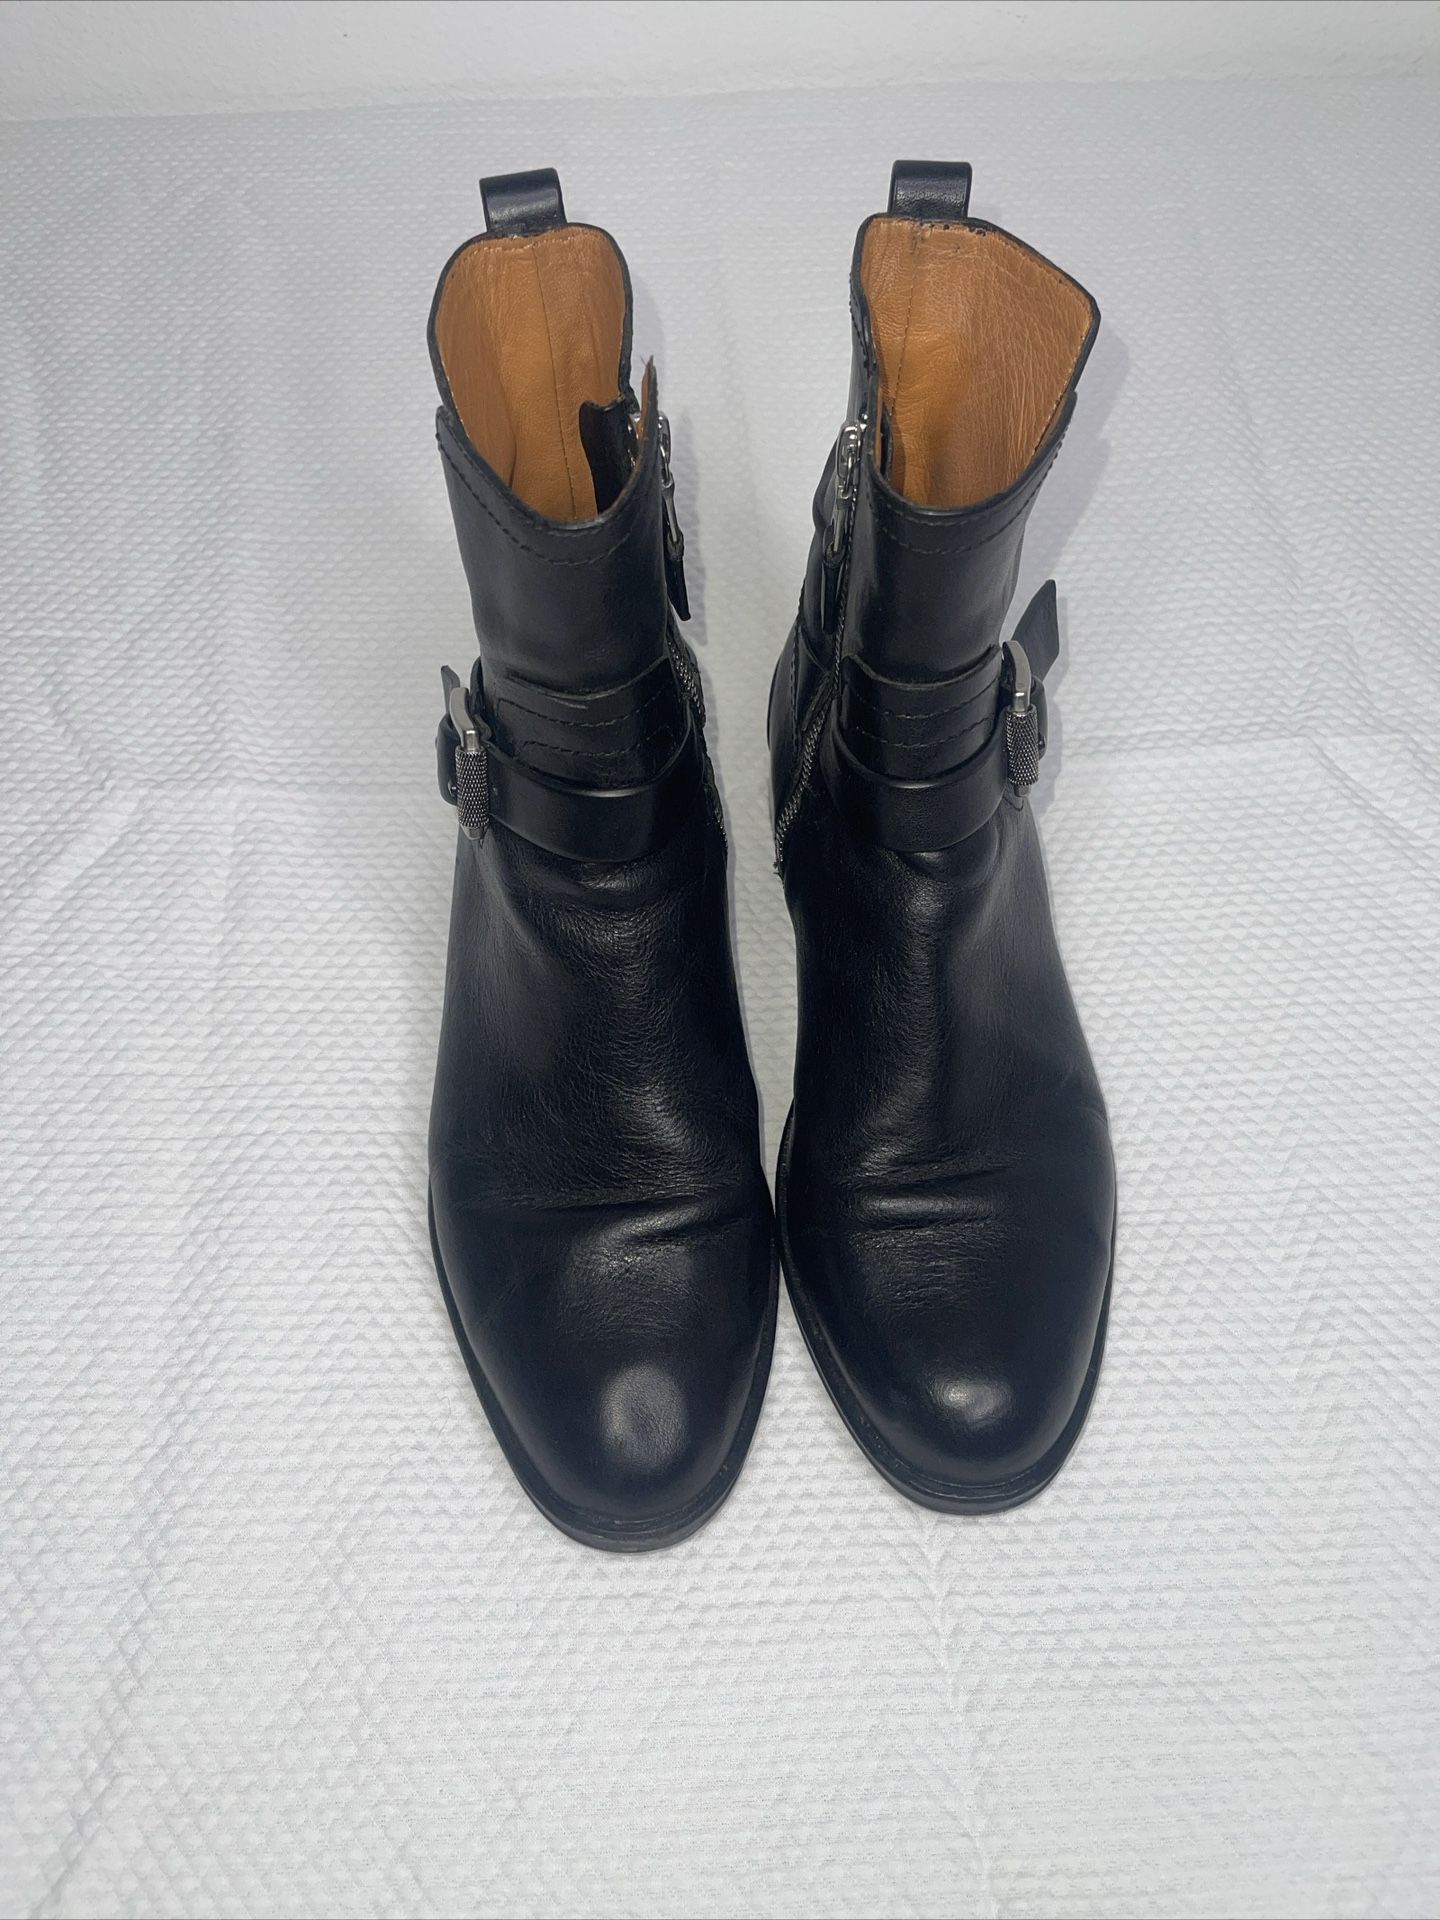 rag & bone Boots Ankle Moto Oliver Zip Black Leather Size 6 EU 37 Buckle Accent